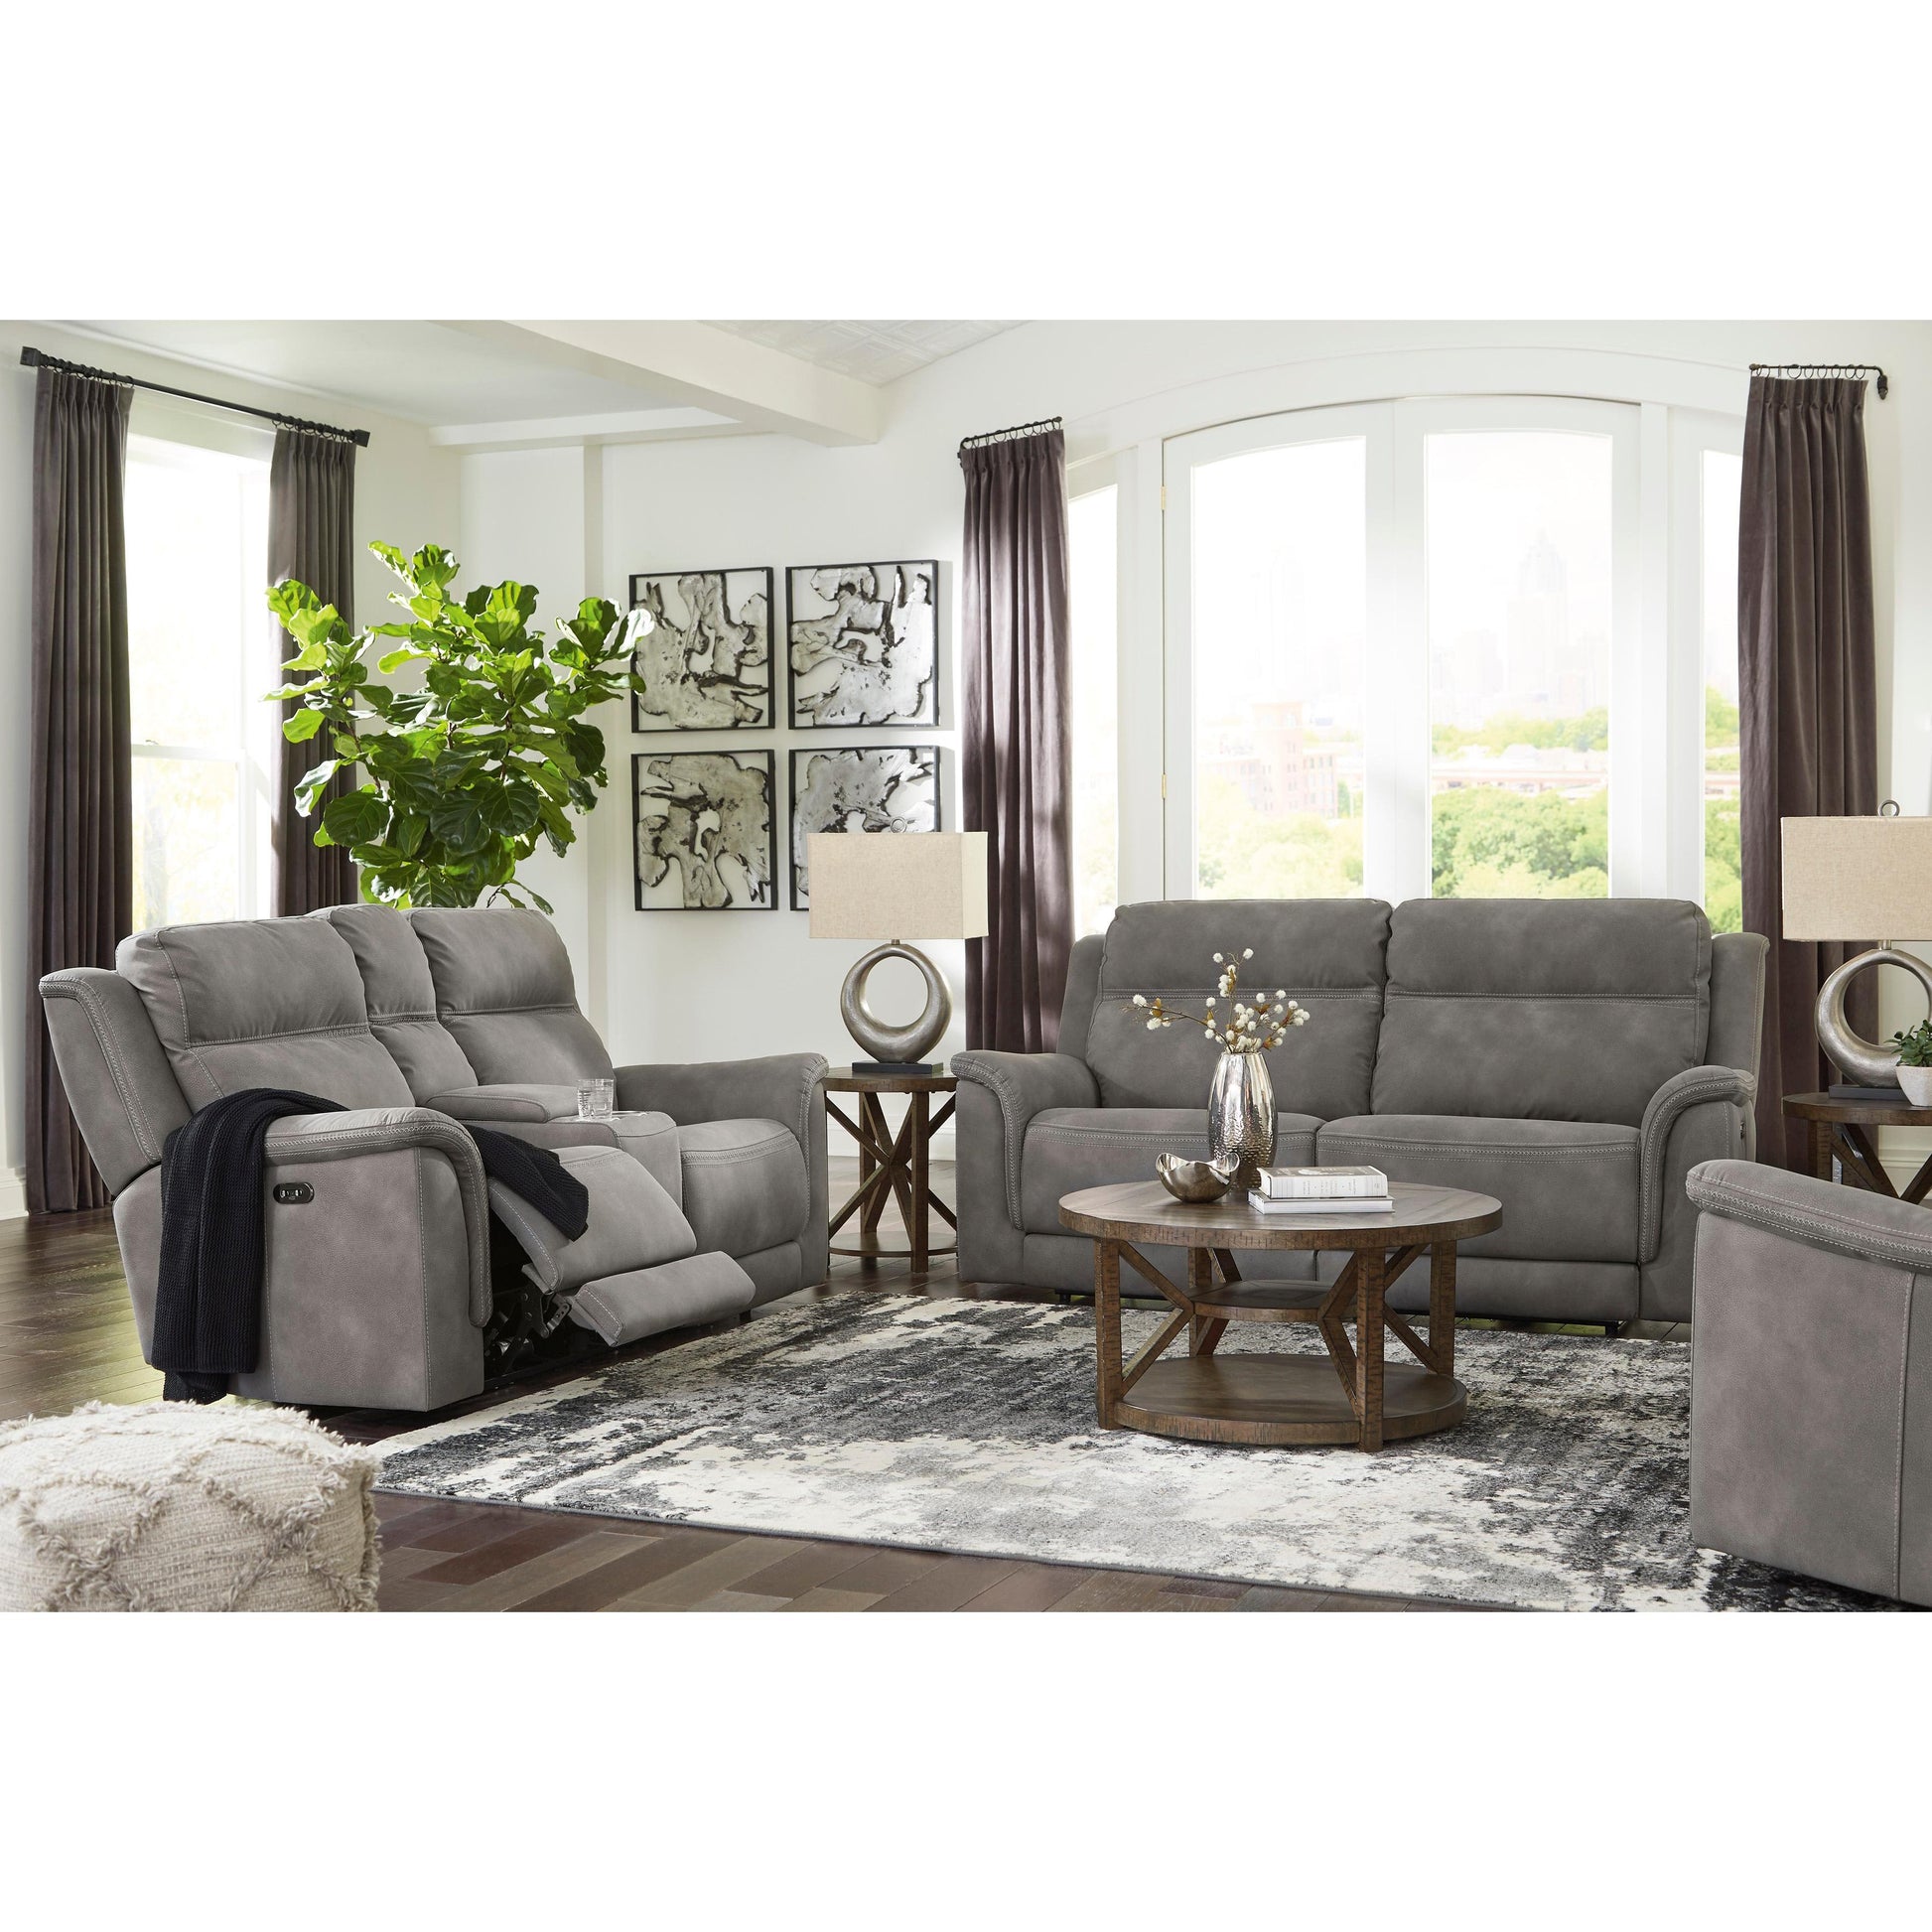 Signature Design by Ashley Next-Gen Durapella 59301 3 pc Power Reclining Living Room Set IMAGE 1